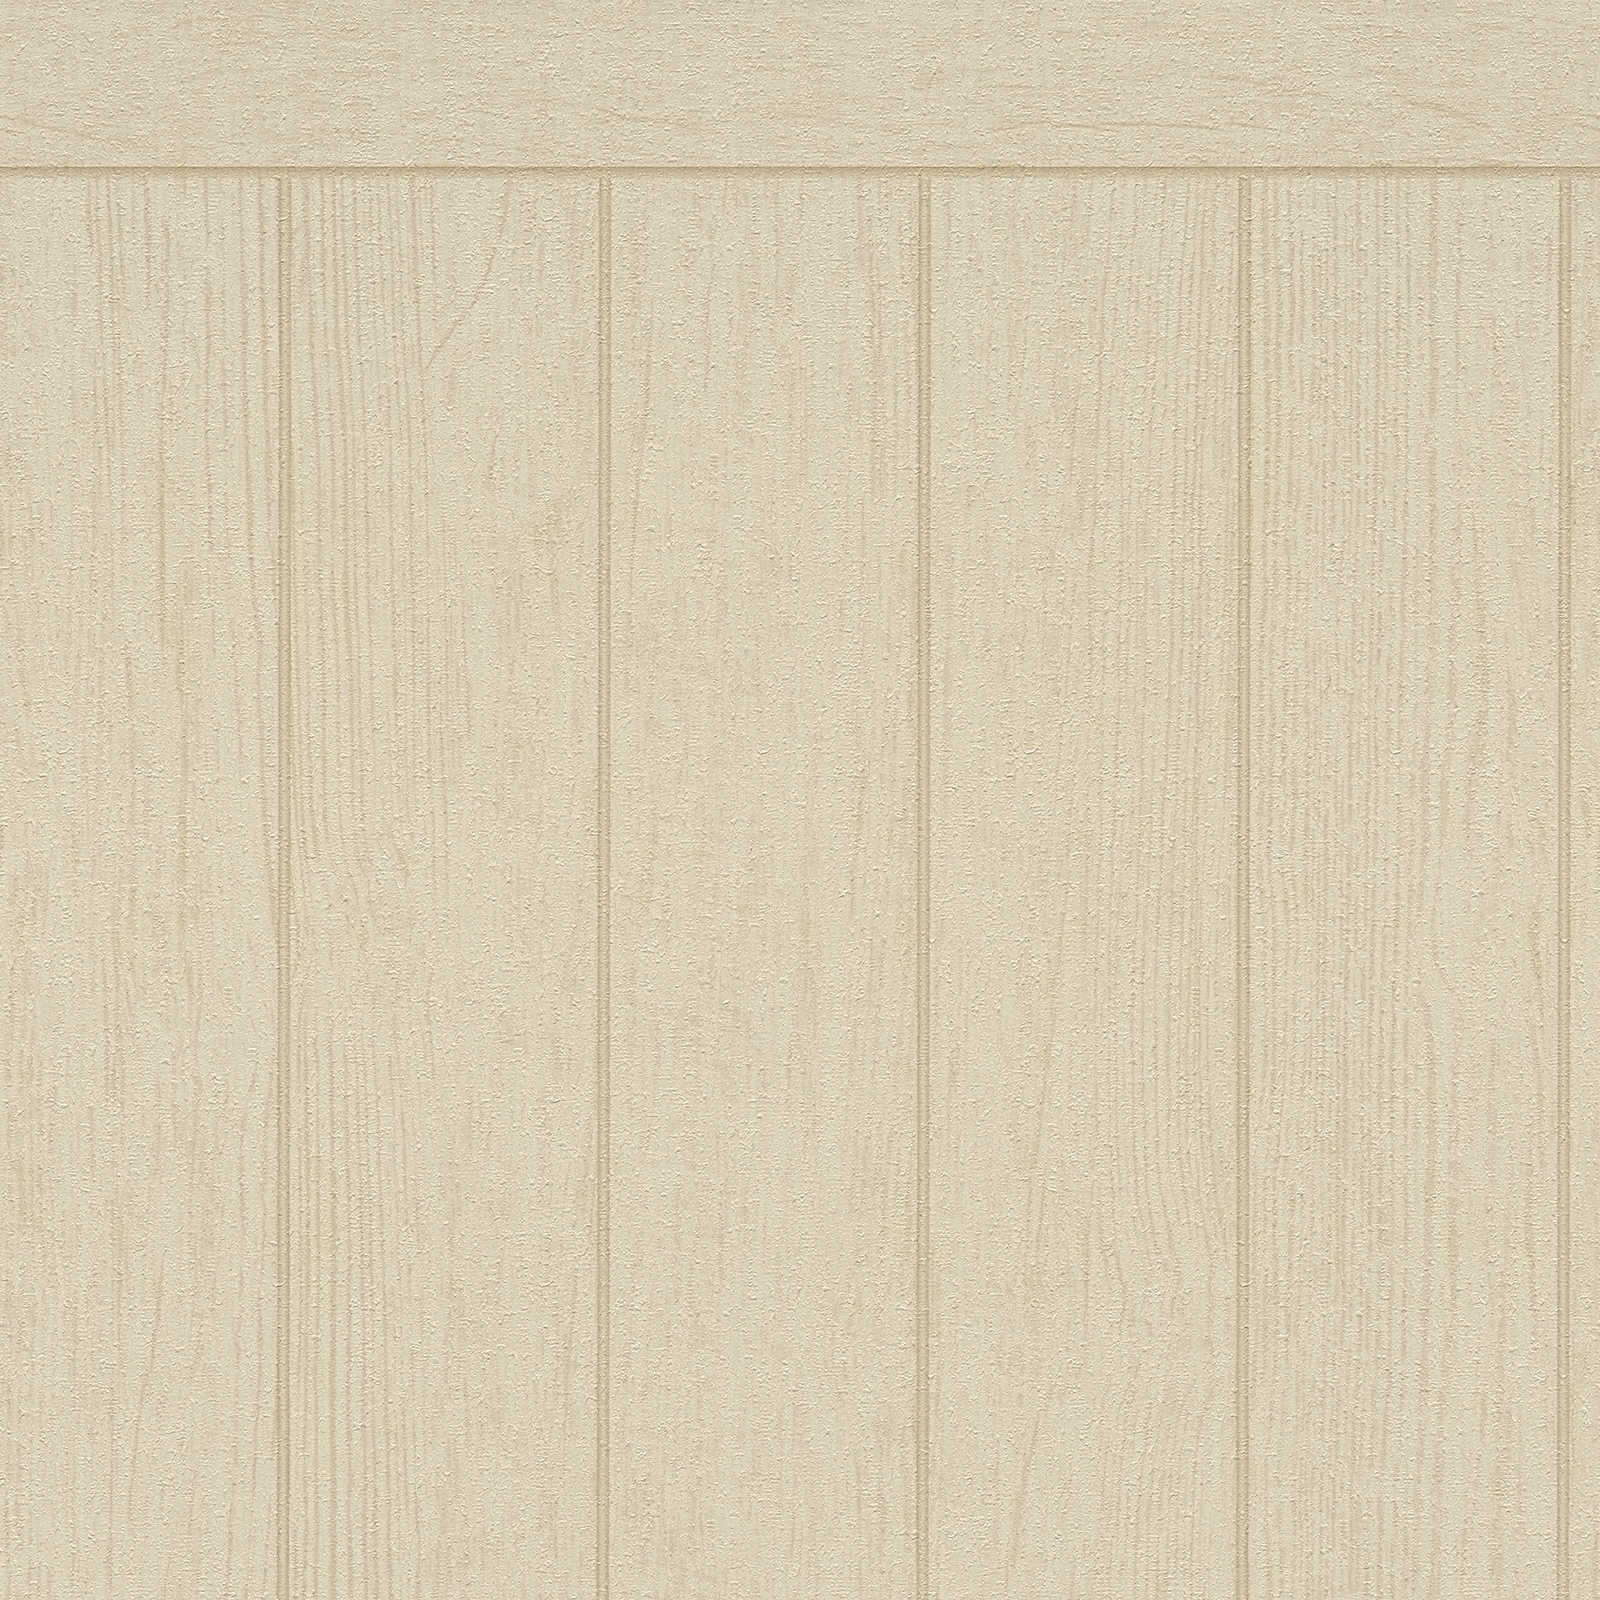 Non-woven wall panel in wooden beam look - beige, brown
